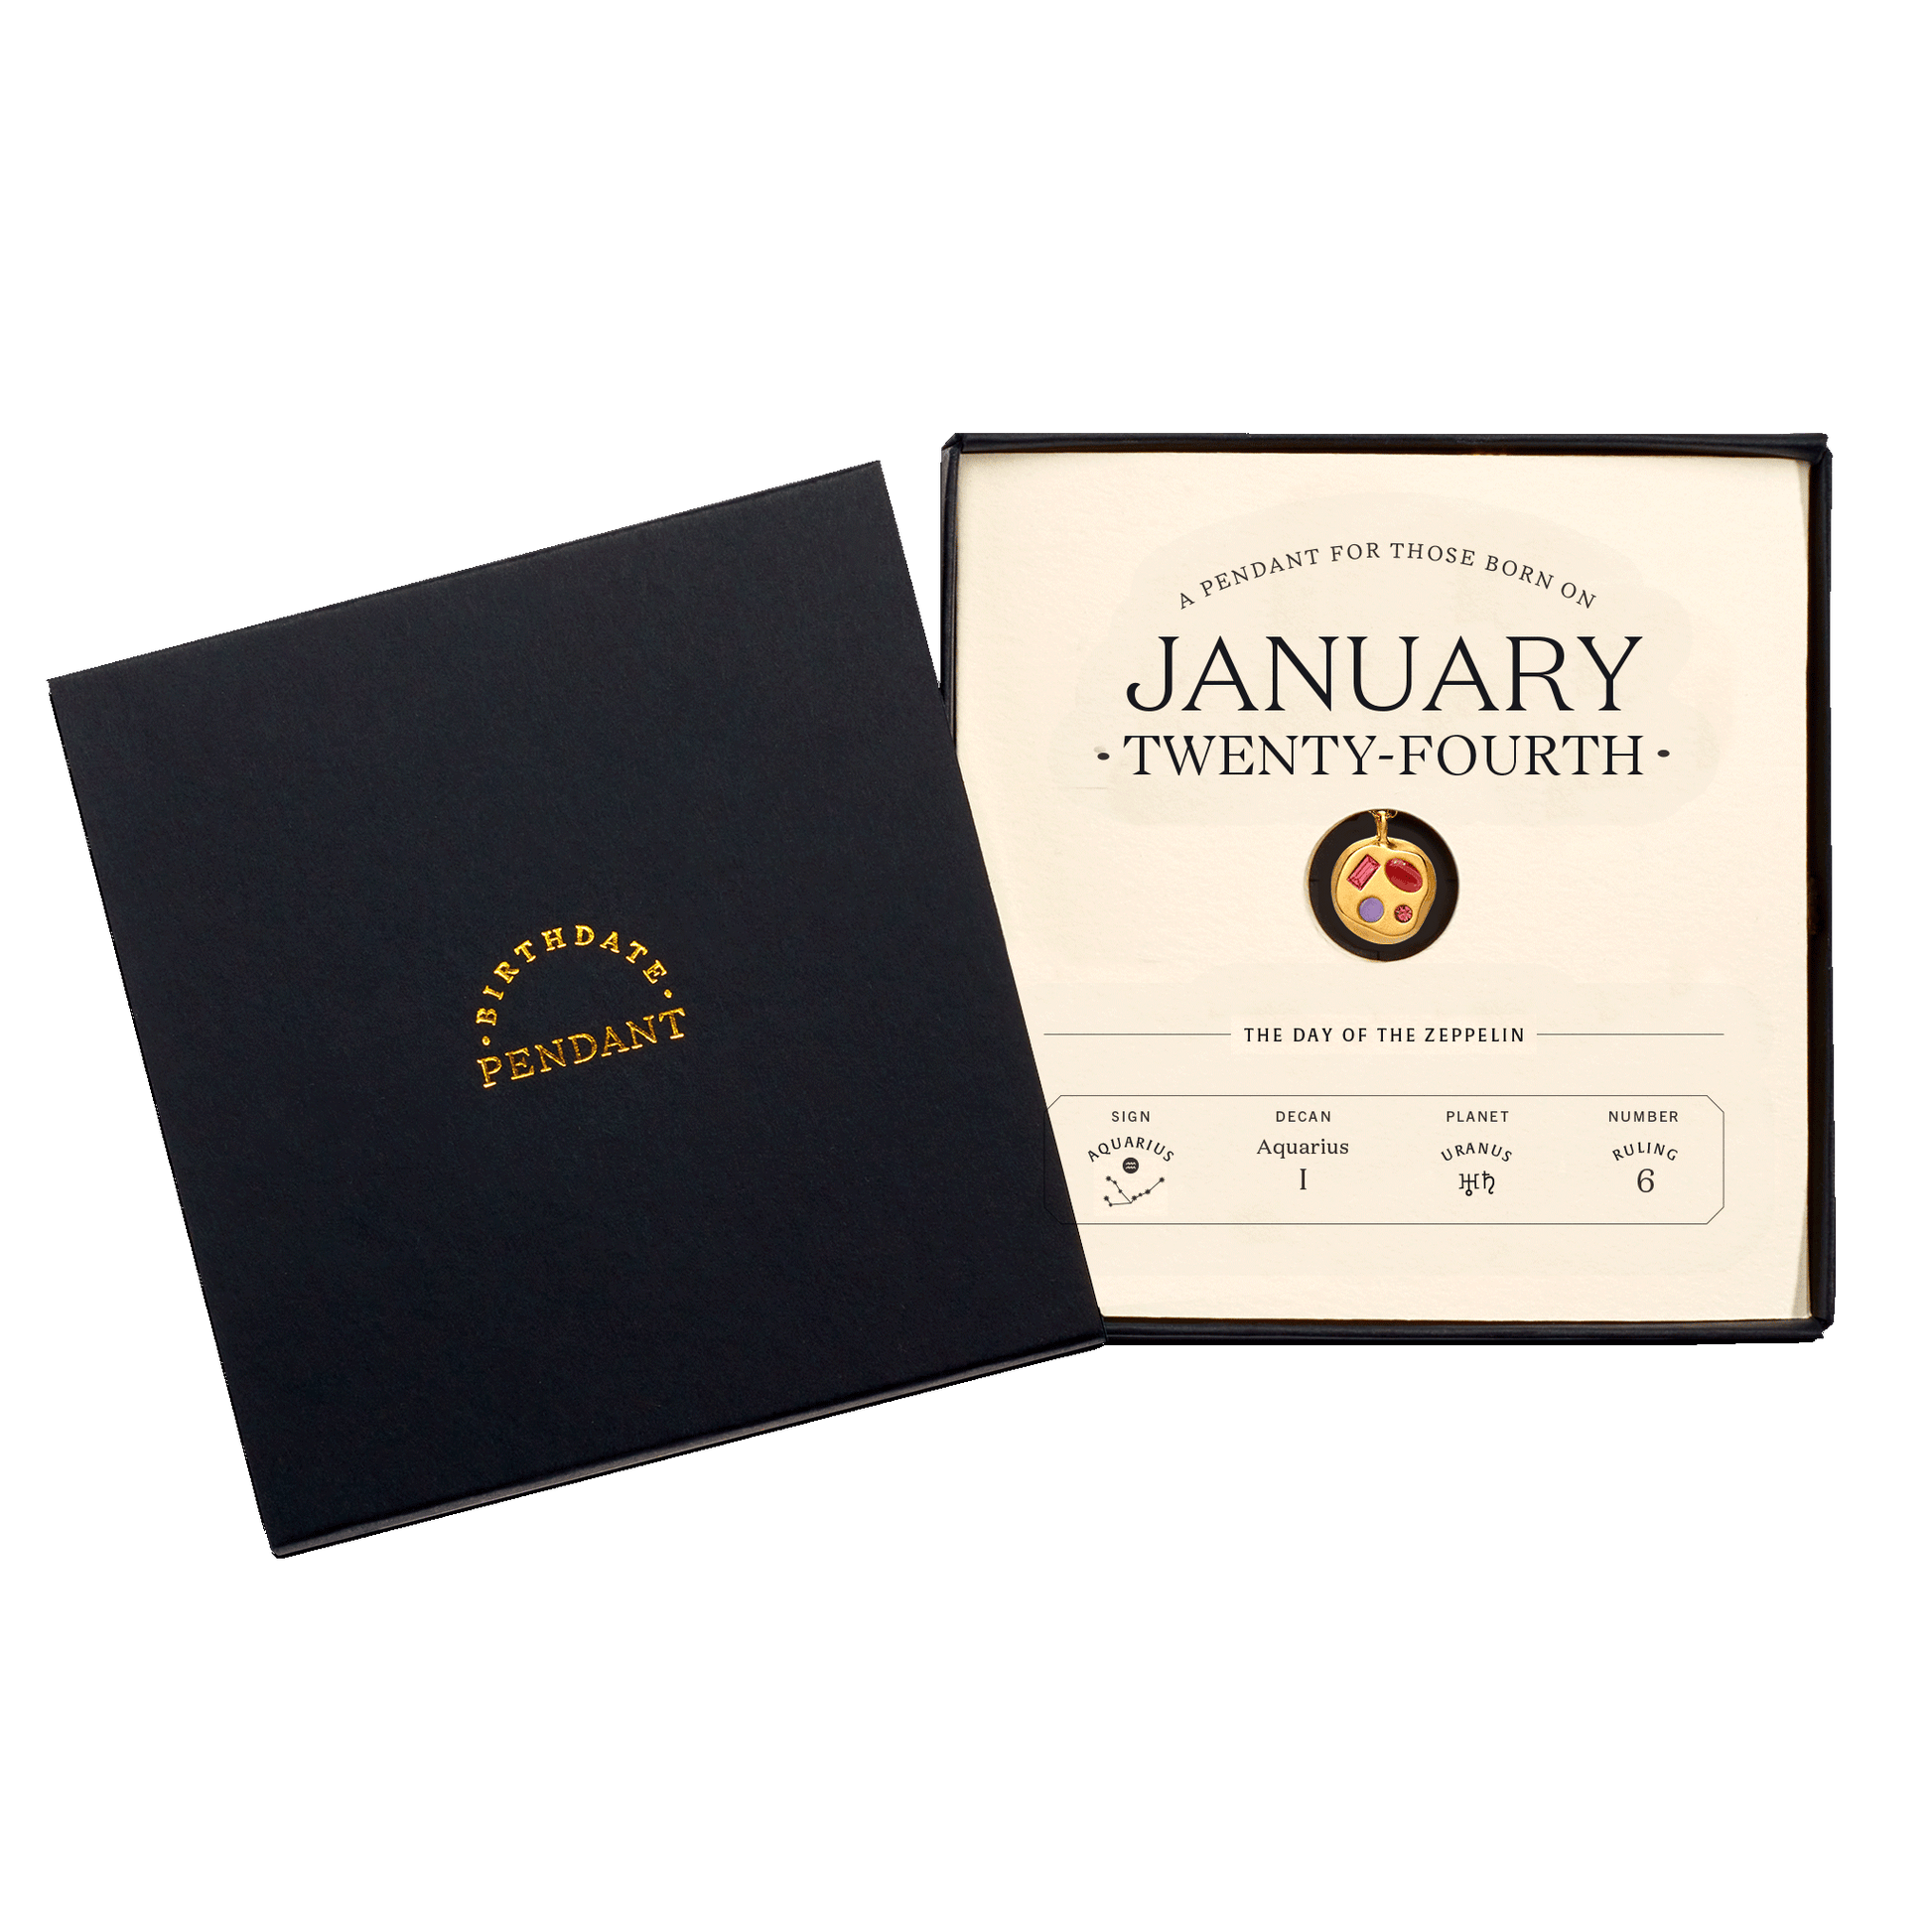 The January Twenty-Fourth Pendant inside its box